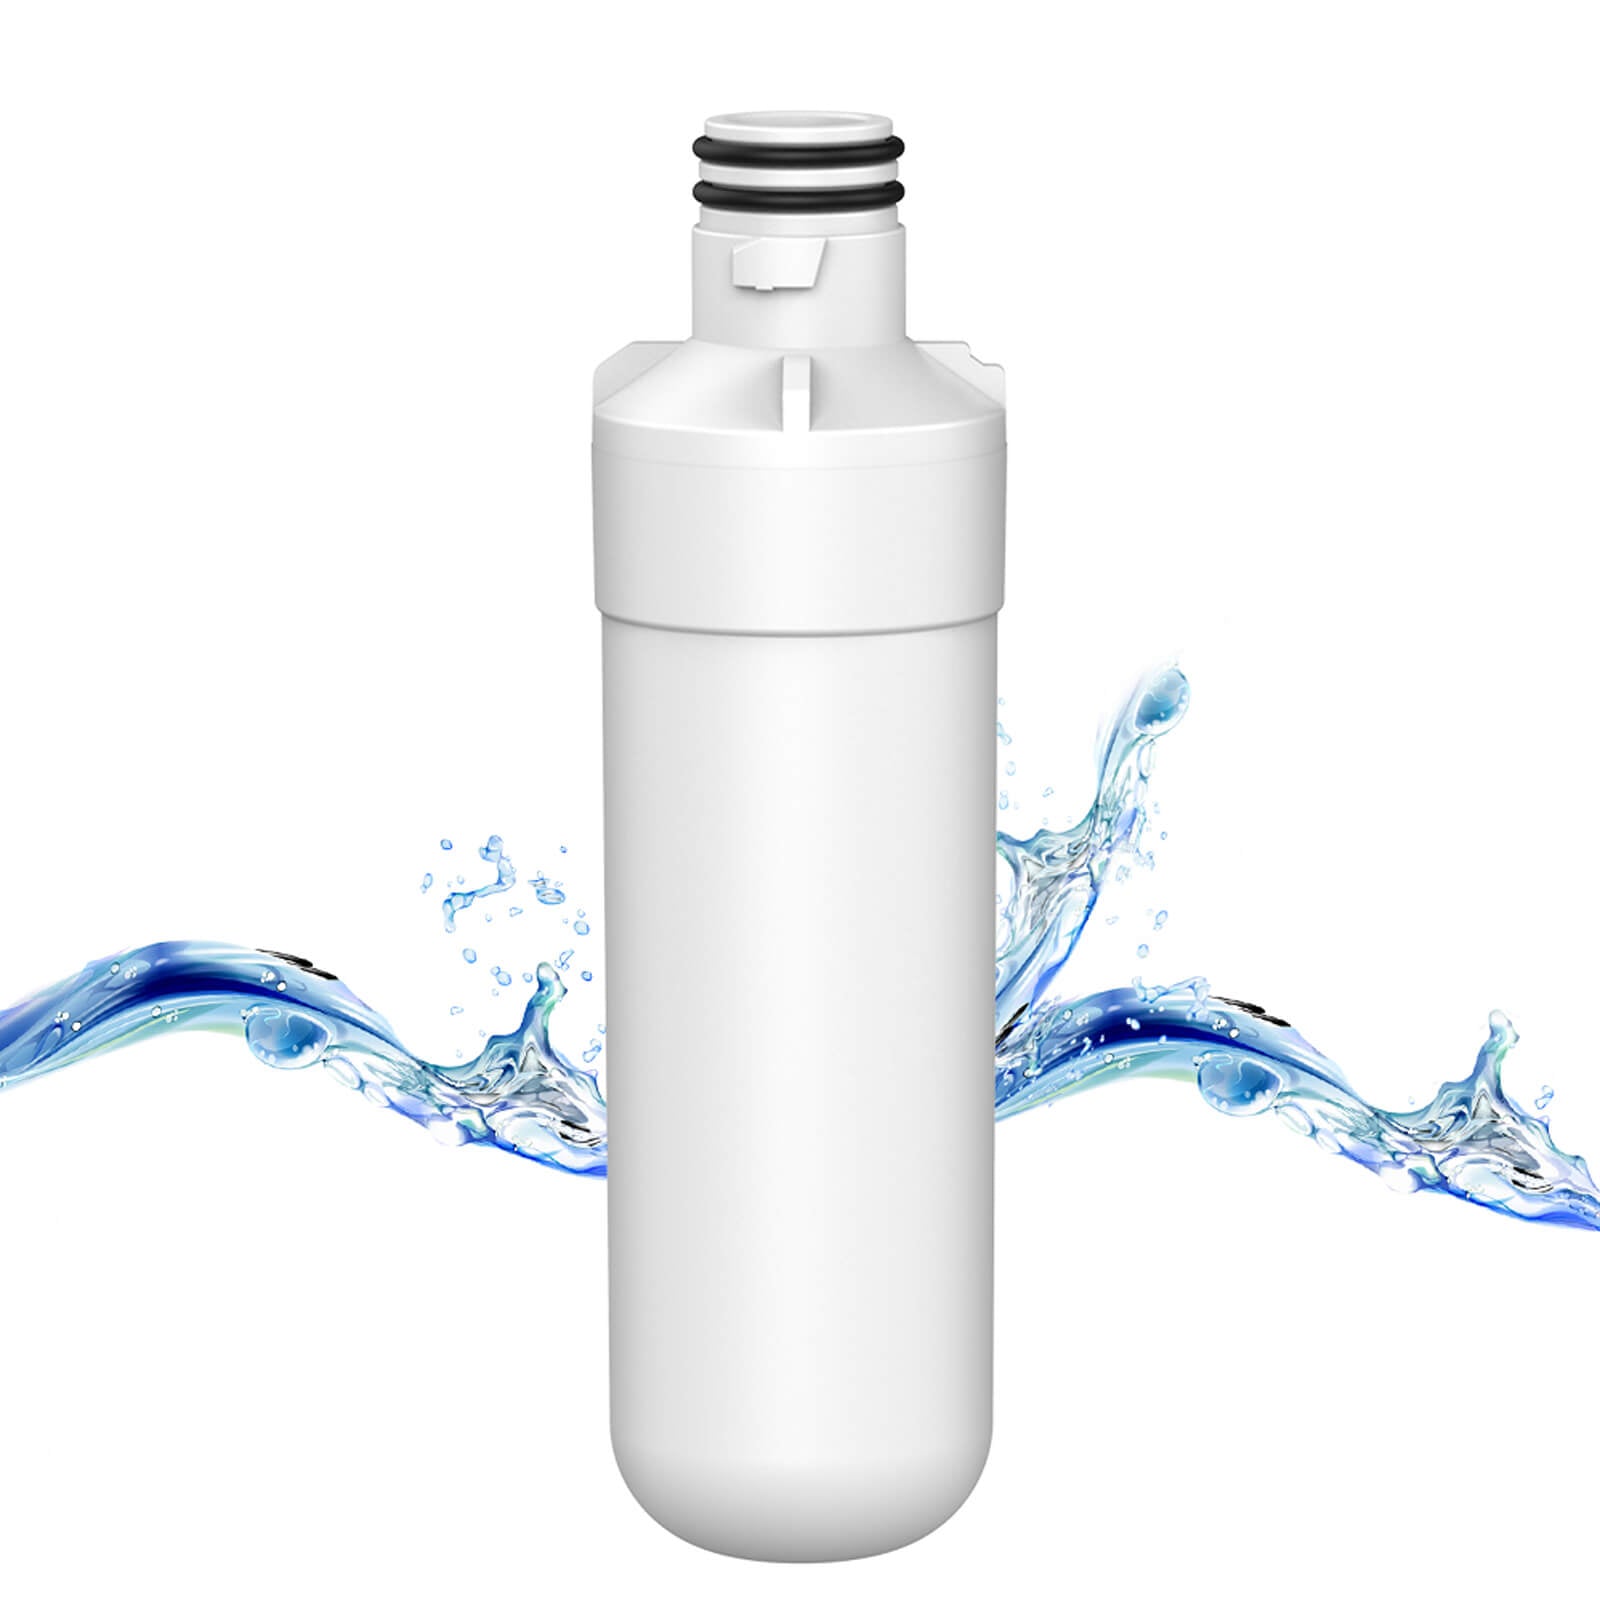 Fridge Water Filter For LG Replacement LT1000P ADQ74793501 MDJ64844601 Sparesbarn